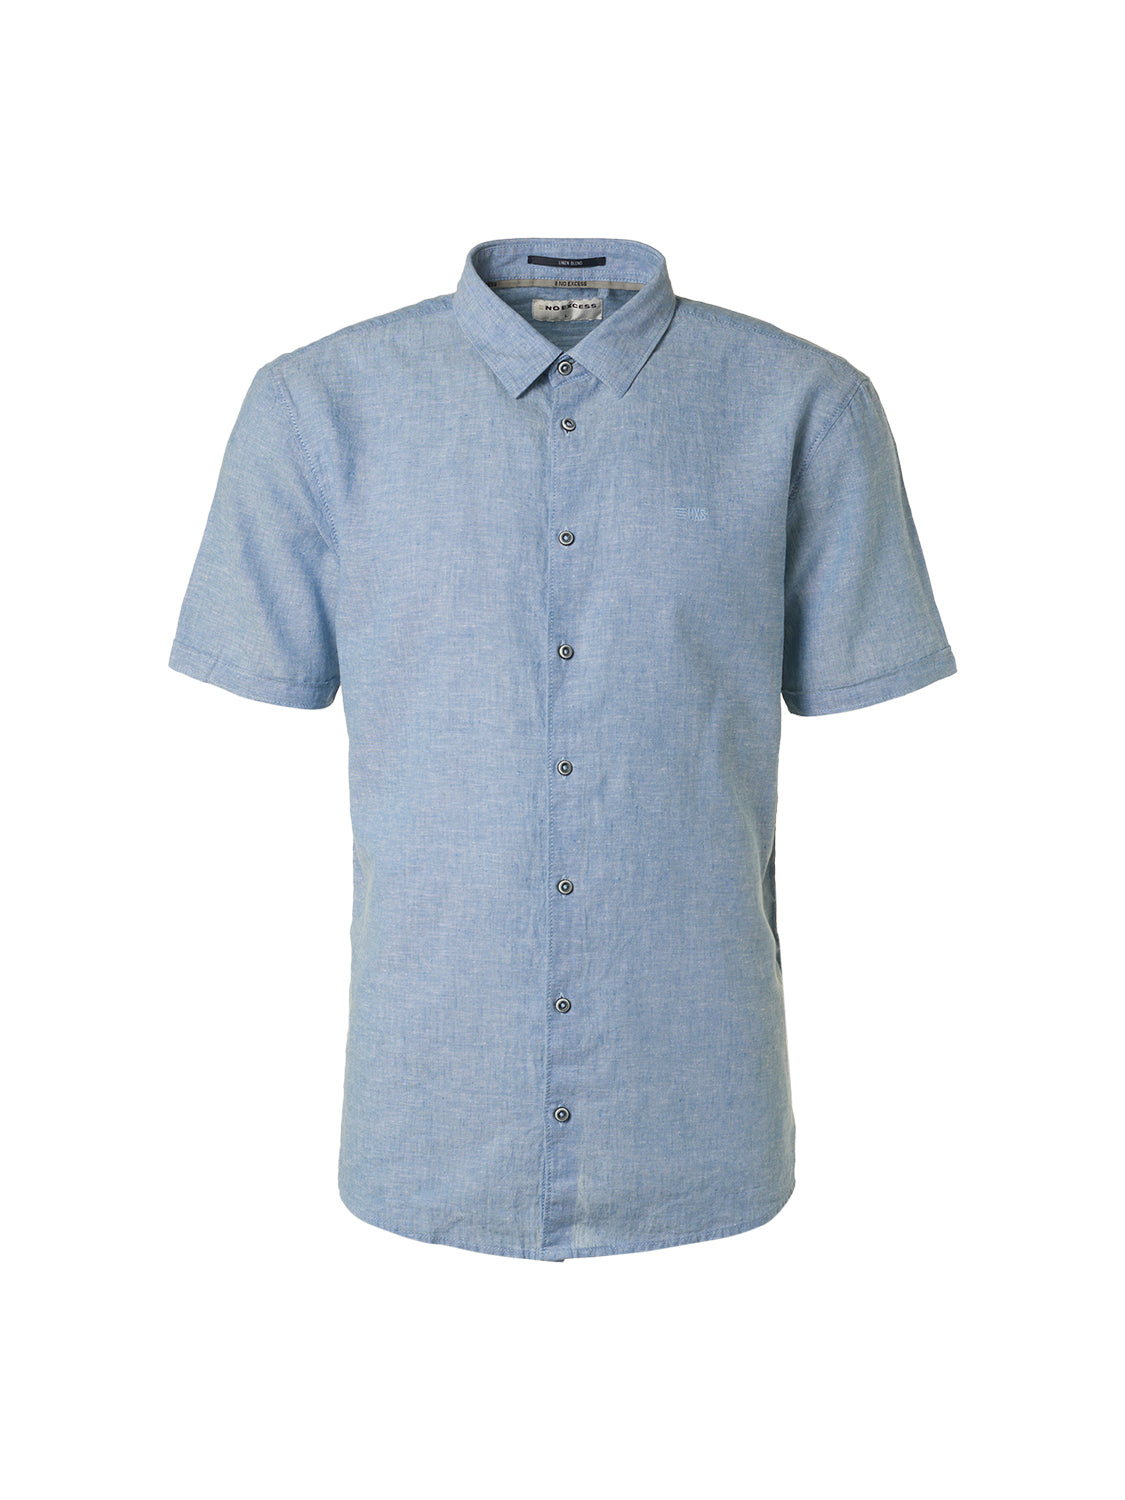 Shirt Short Sleeve 2 Colour Melange - 19490317